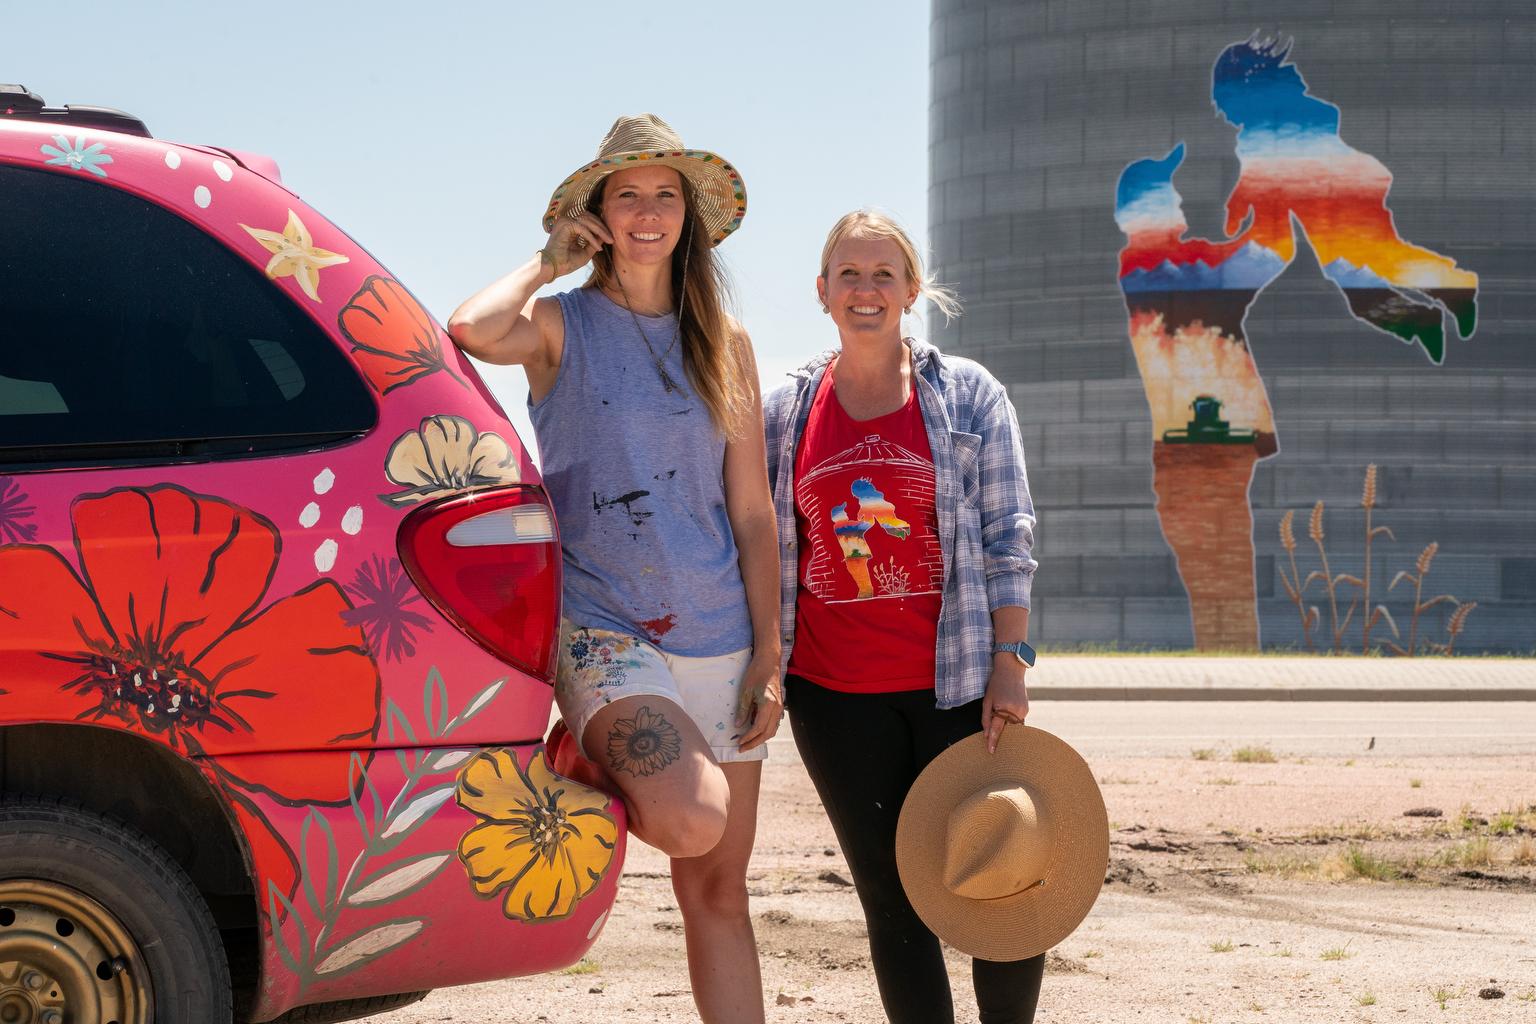 TWO WOMEN ARTISTS STAND NEAR THEIR FARMER MURAL